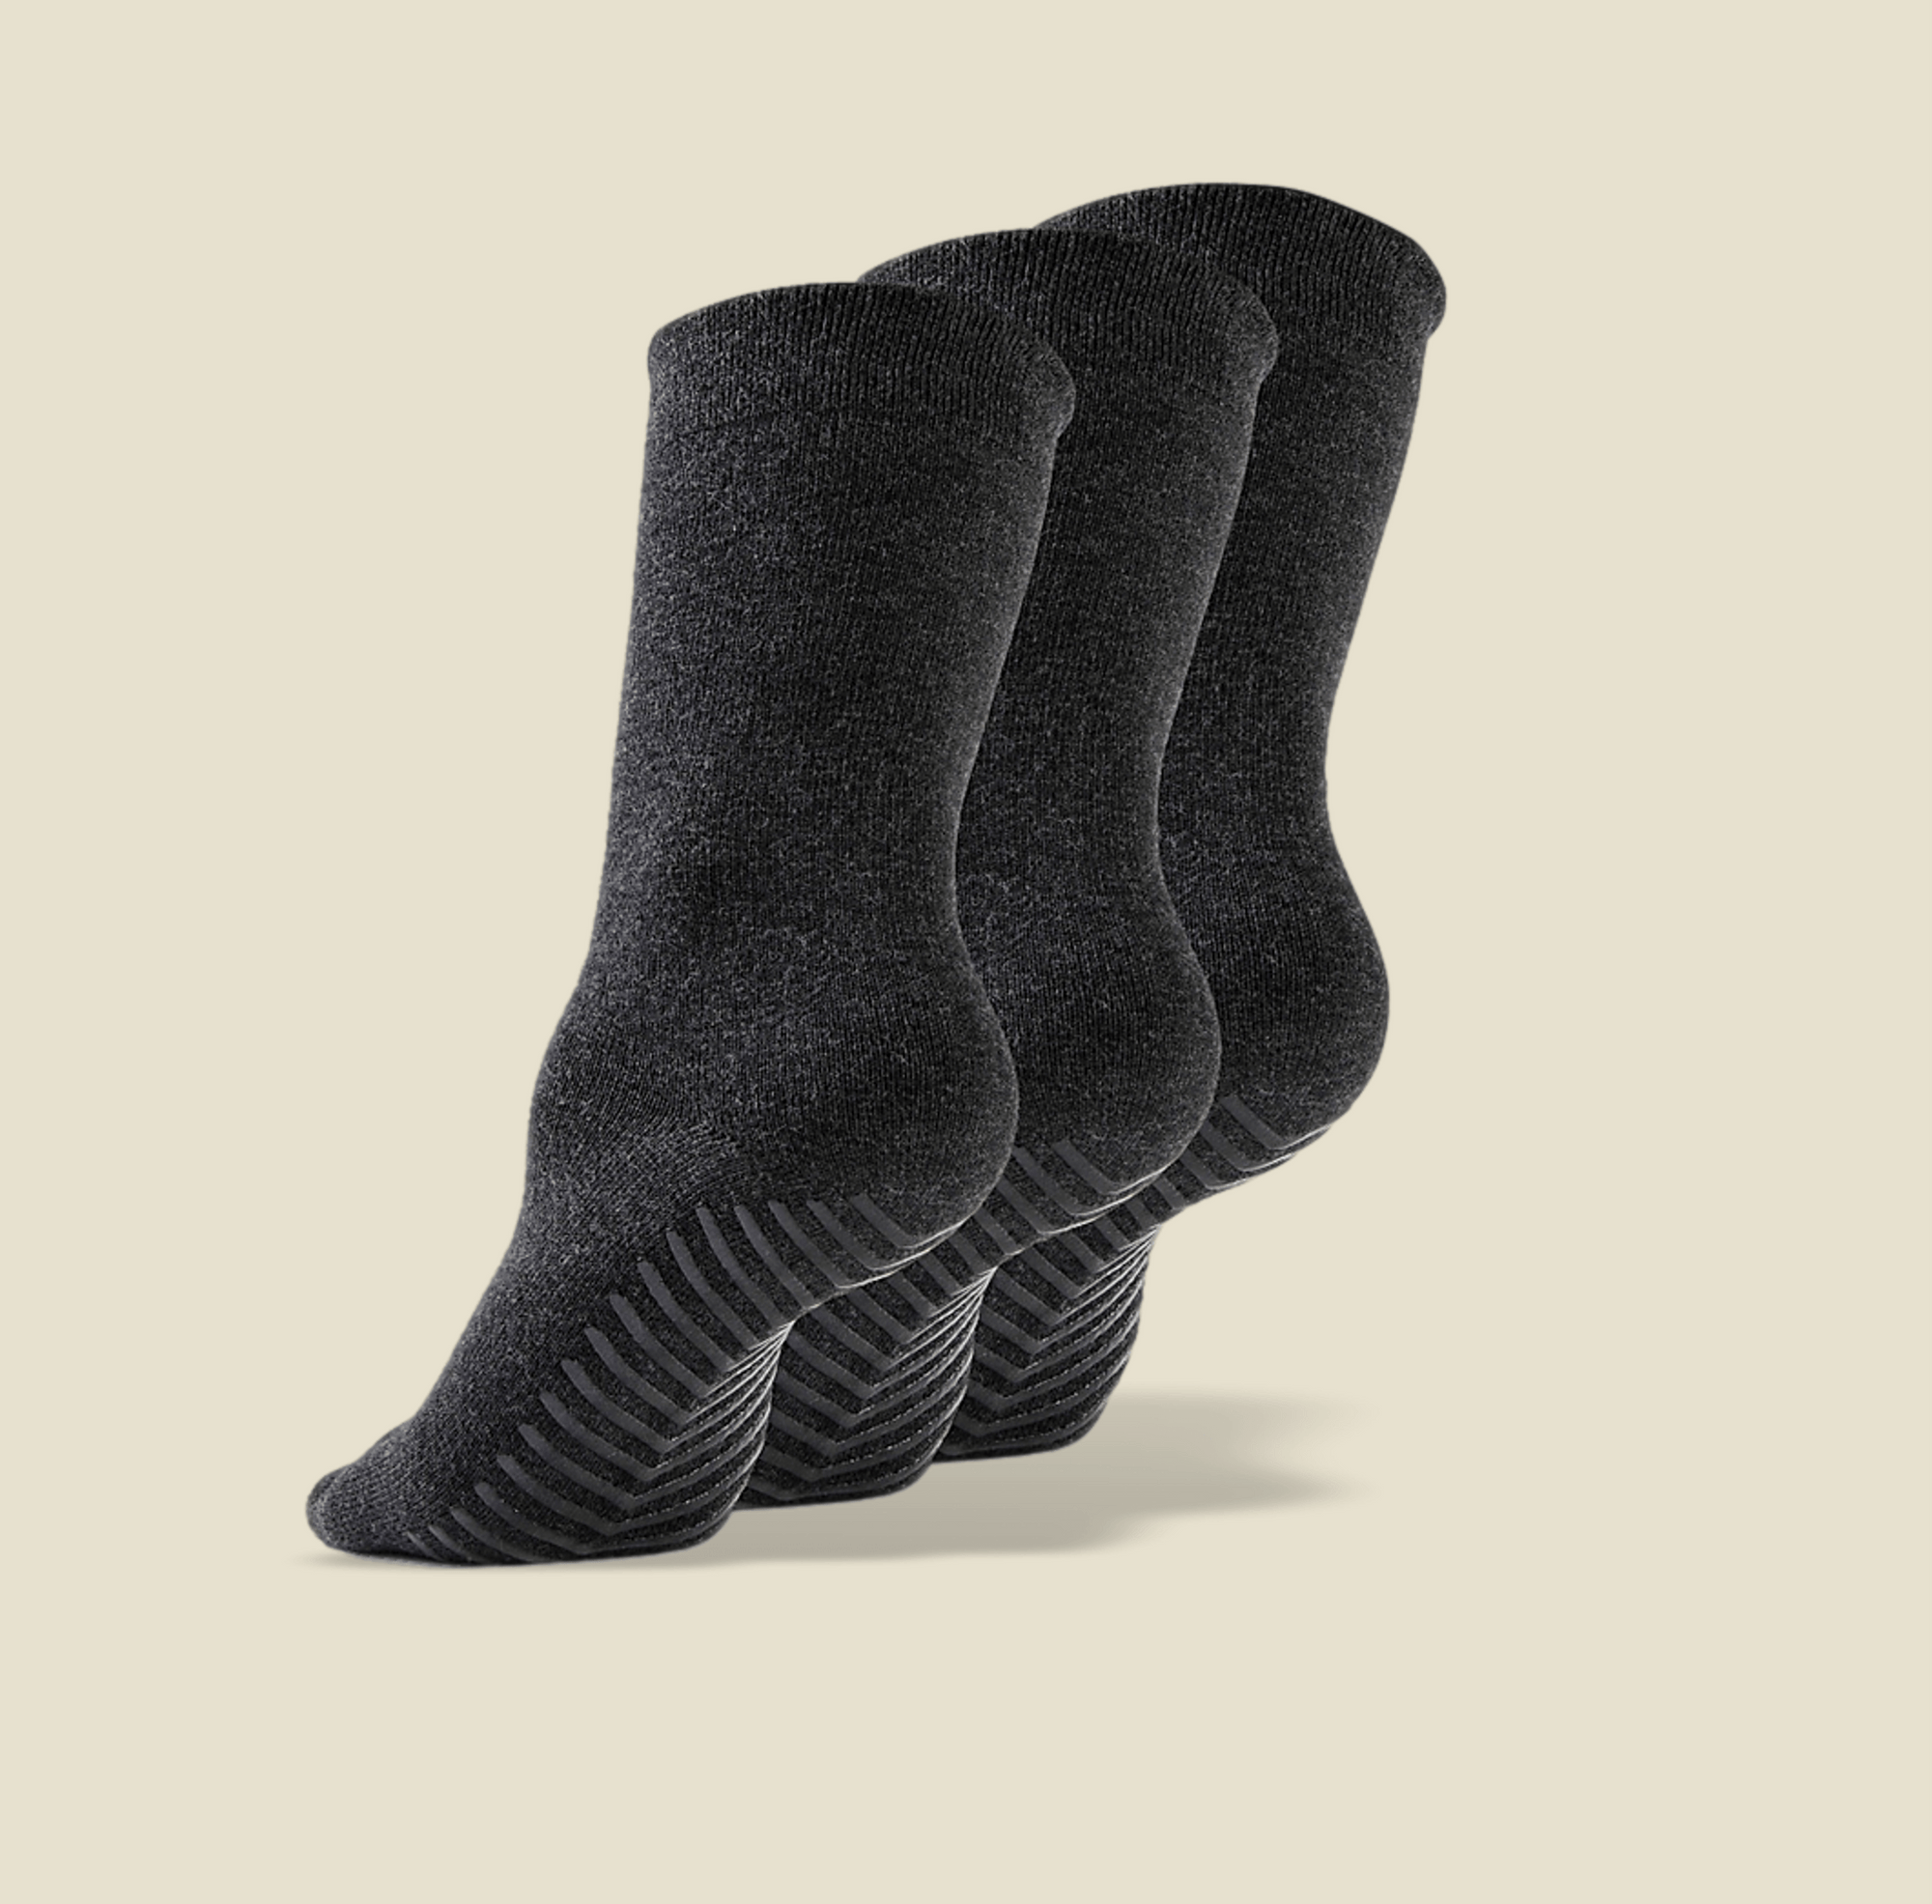 Women's Dark Grey Original Crew Non-Slip Socks - 3 pairs - Gripjoy Socks